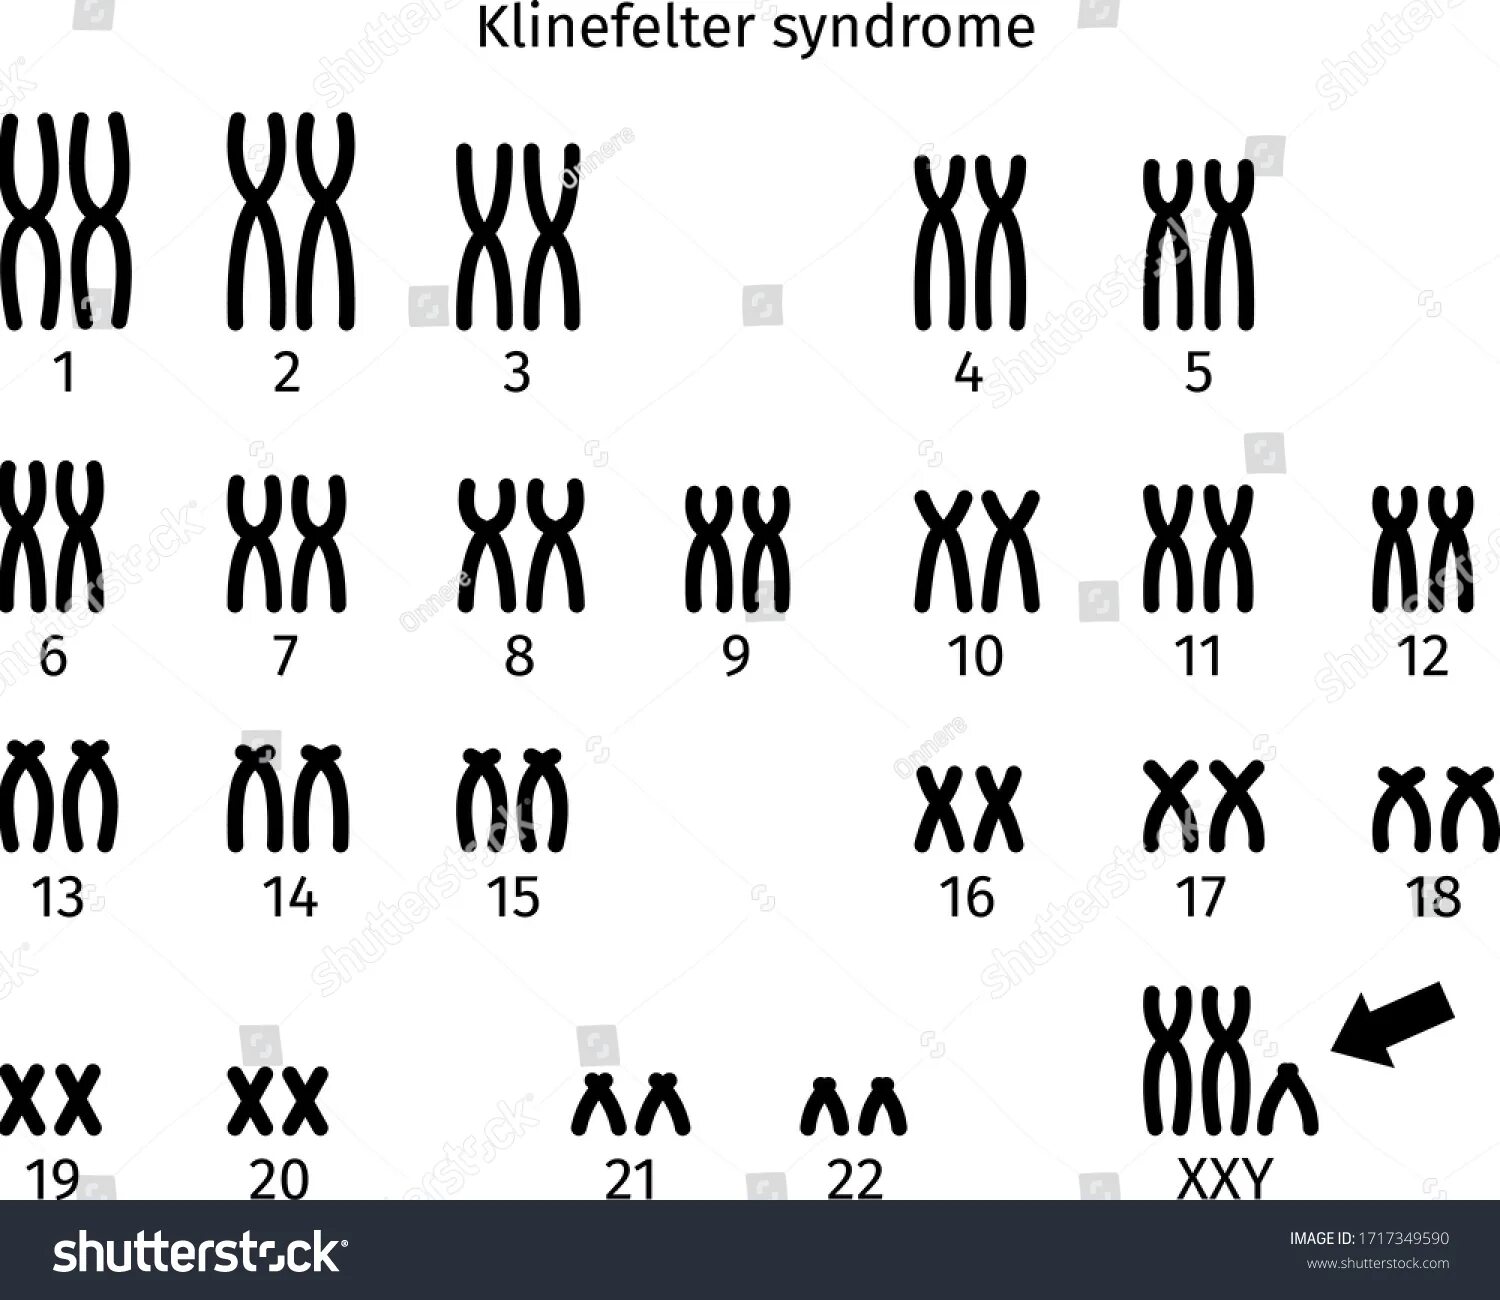 Xxy хромосома. Klinefelter Syndrome karyotype. Клайнфелтер кариотип.